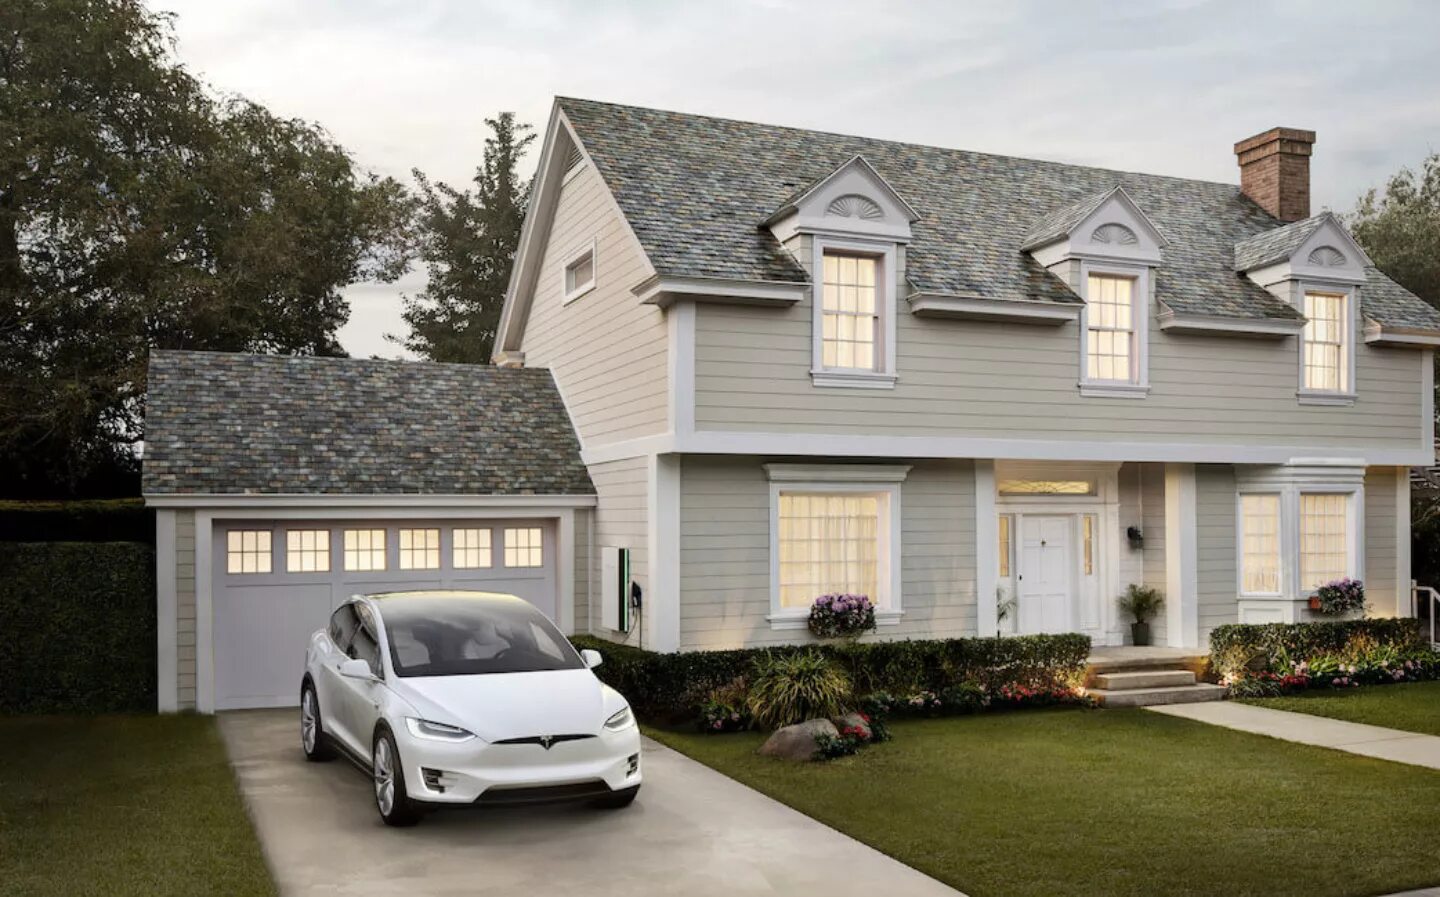 Home car new. Tesla Solar Roof. Tesla Solar Roof машина. Машина возле дома. Коттедж с машиной.